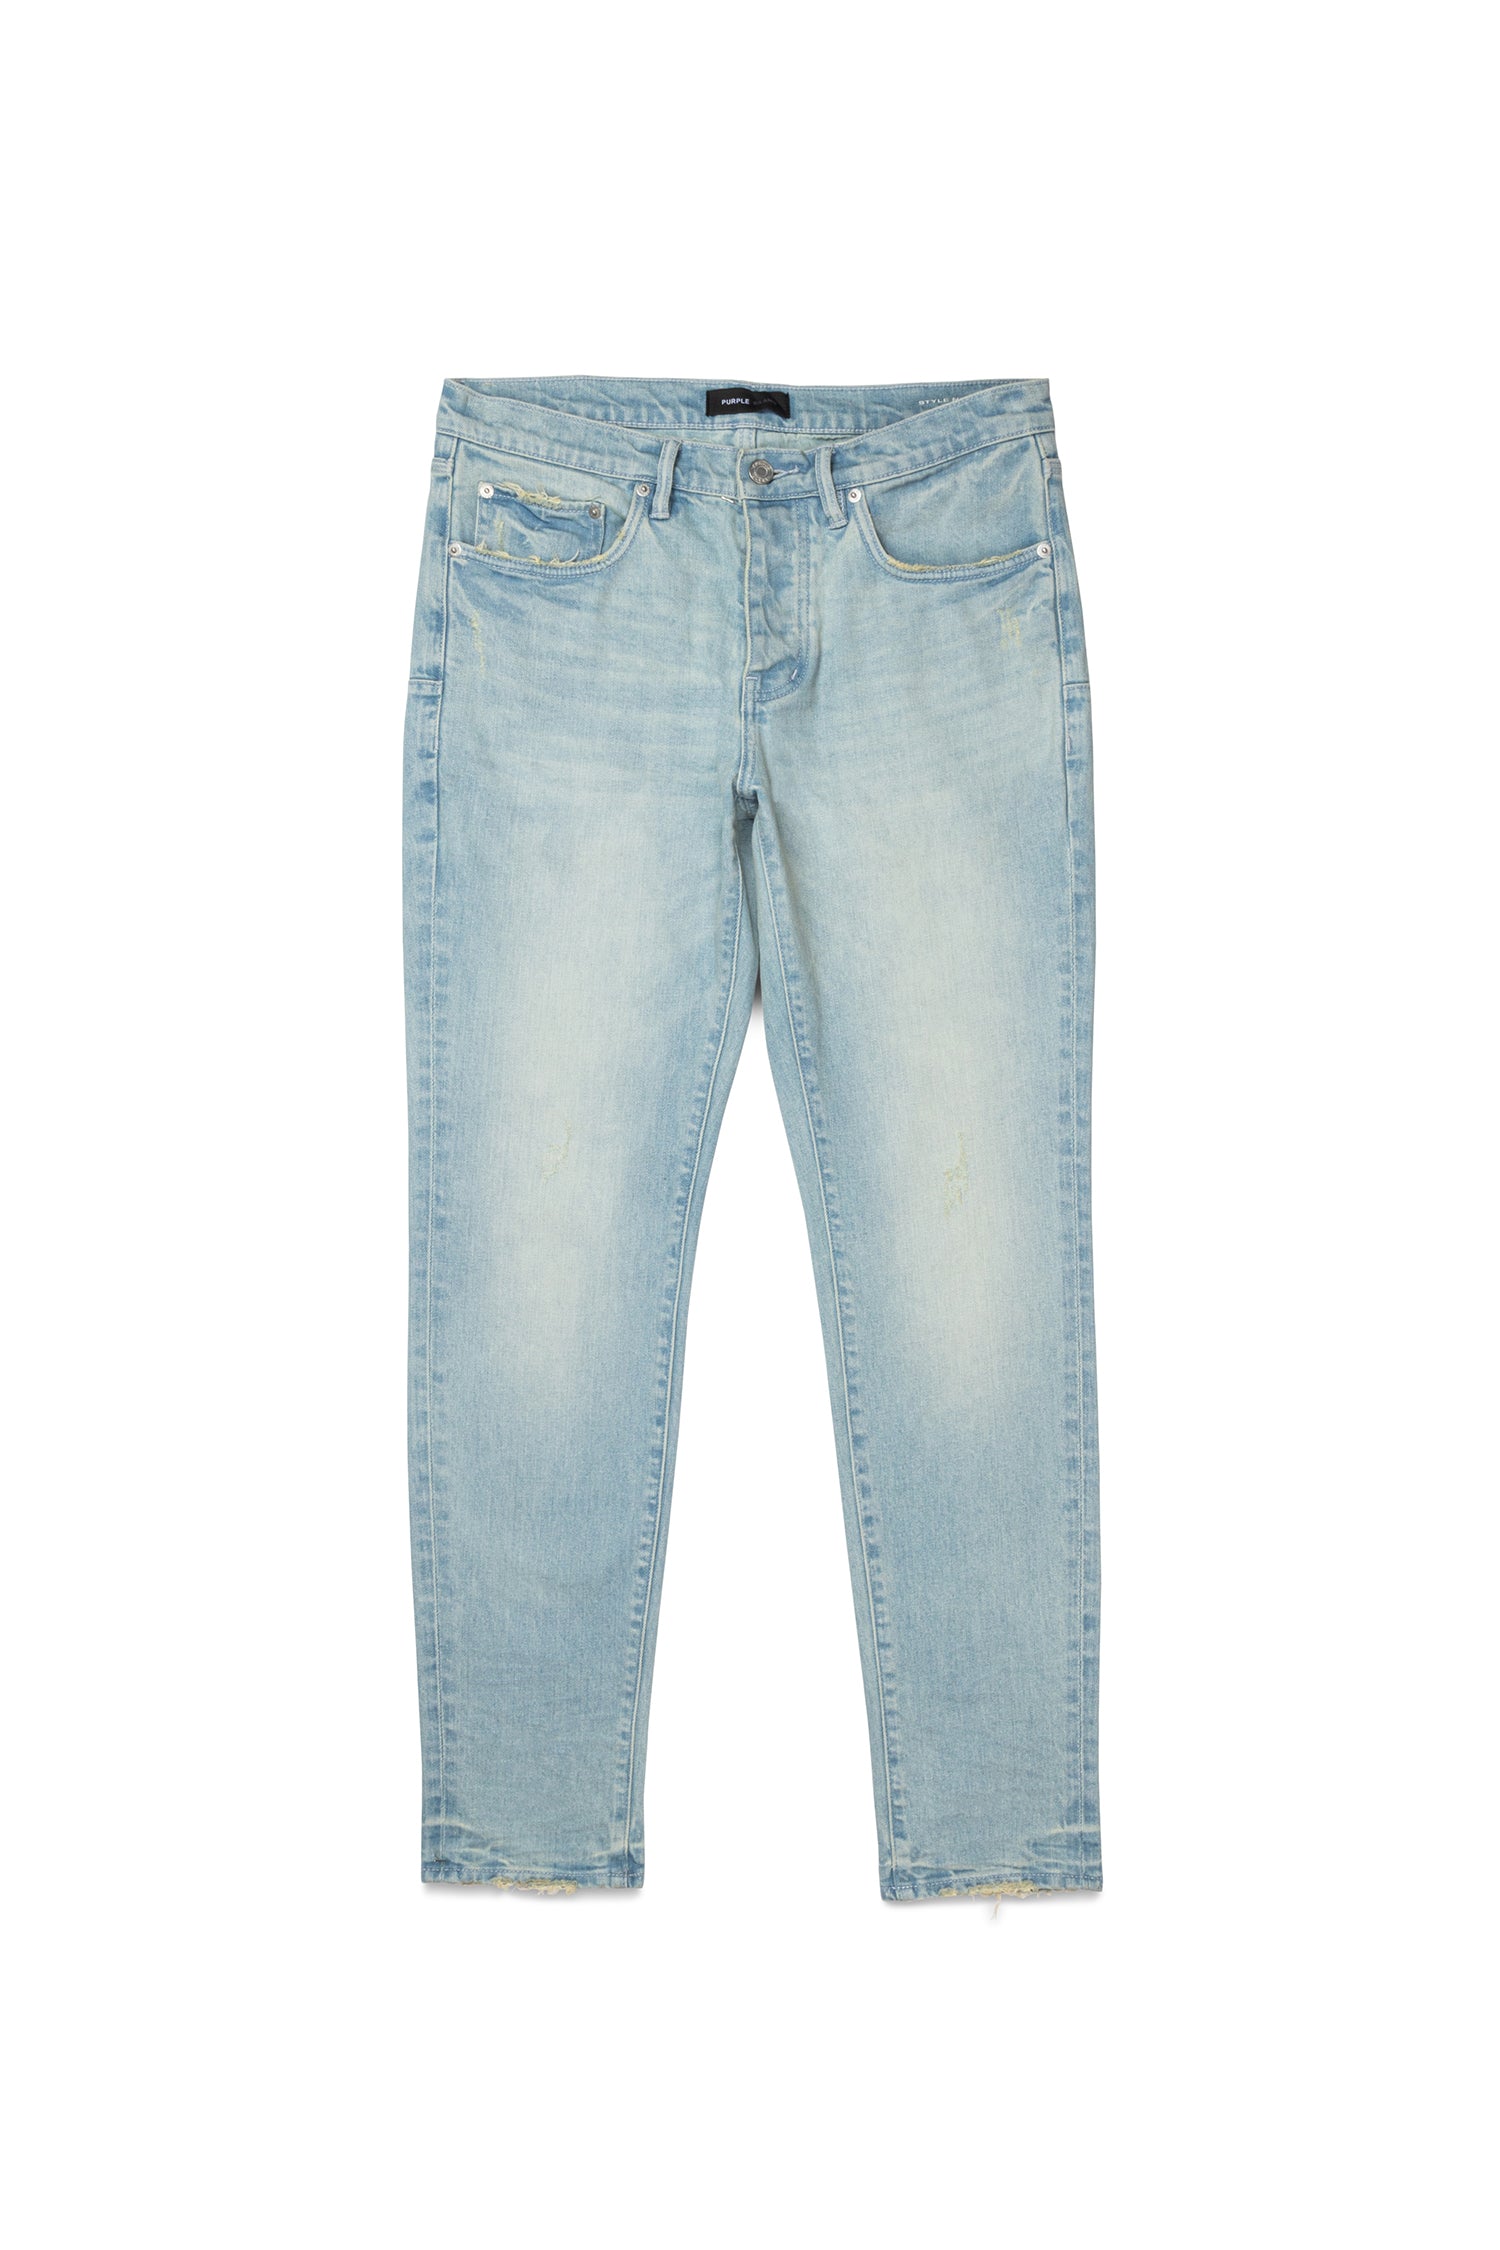 Purple Brand Jeans - White Splatter Striped - Light Blue - P001 – Dabbous